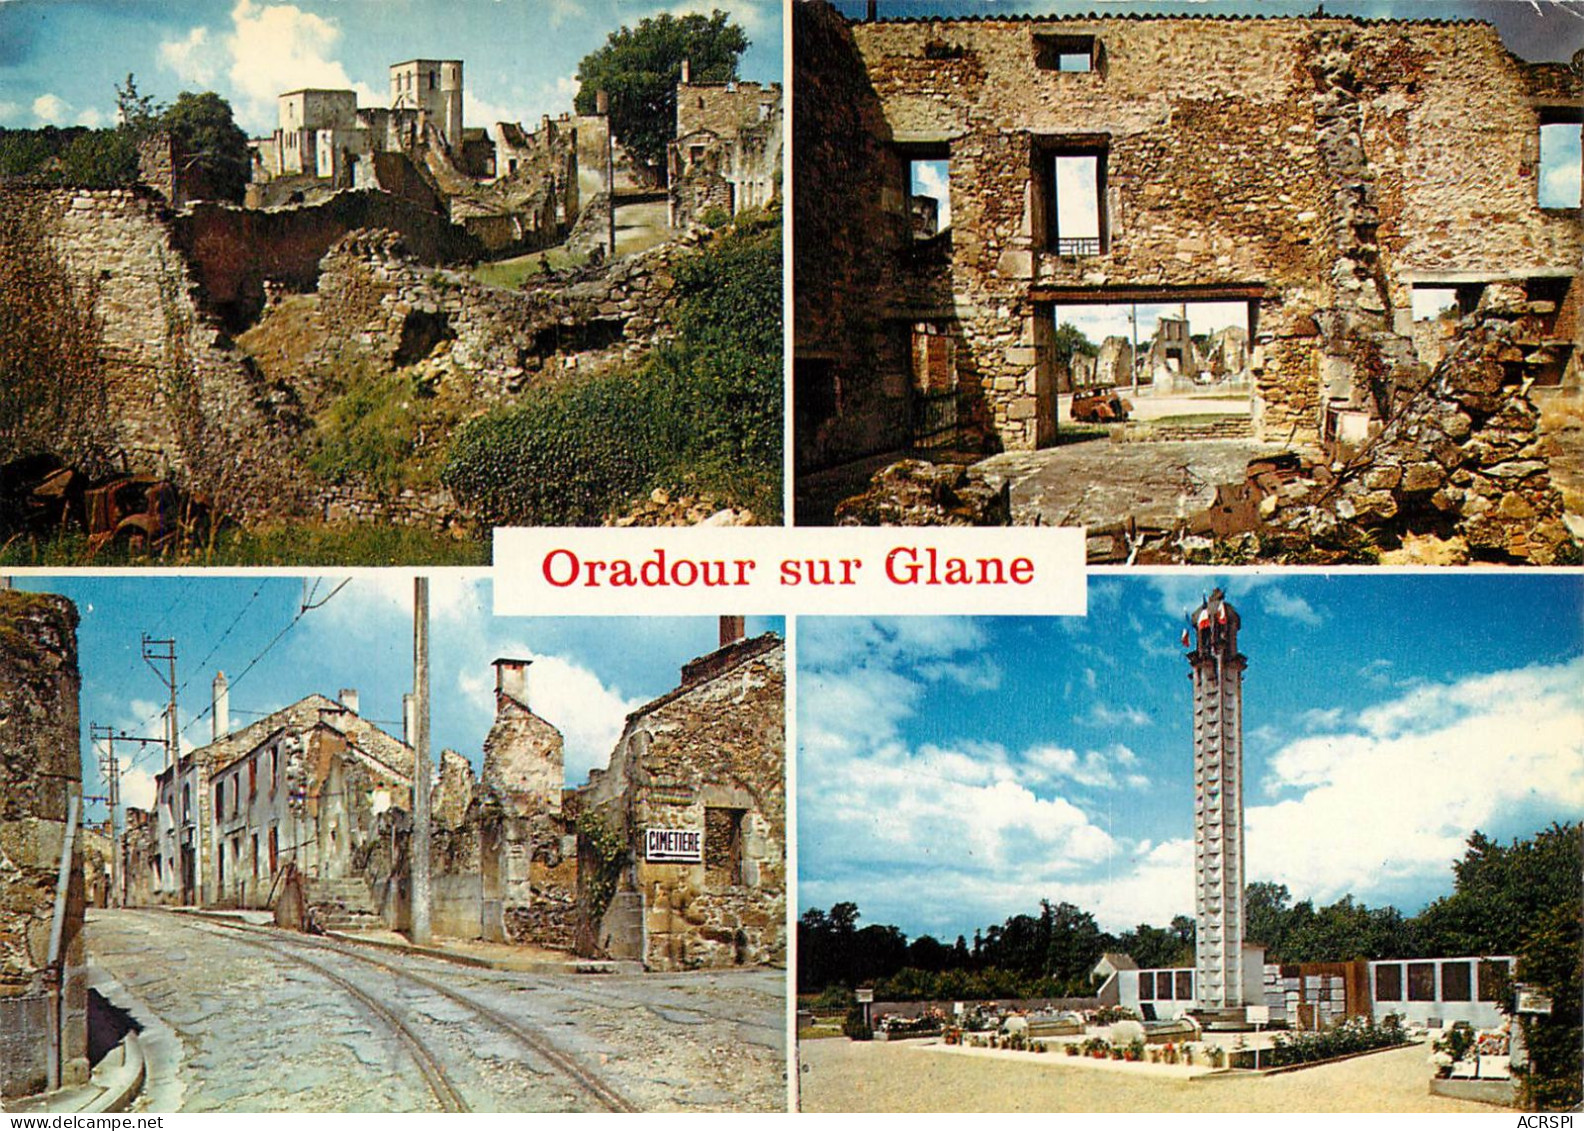 ORADOUR Sur GLANE  4 Vue De La Ville   29   (scan Recto-verso)MA2278Ter - Oradour Sur Glane